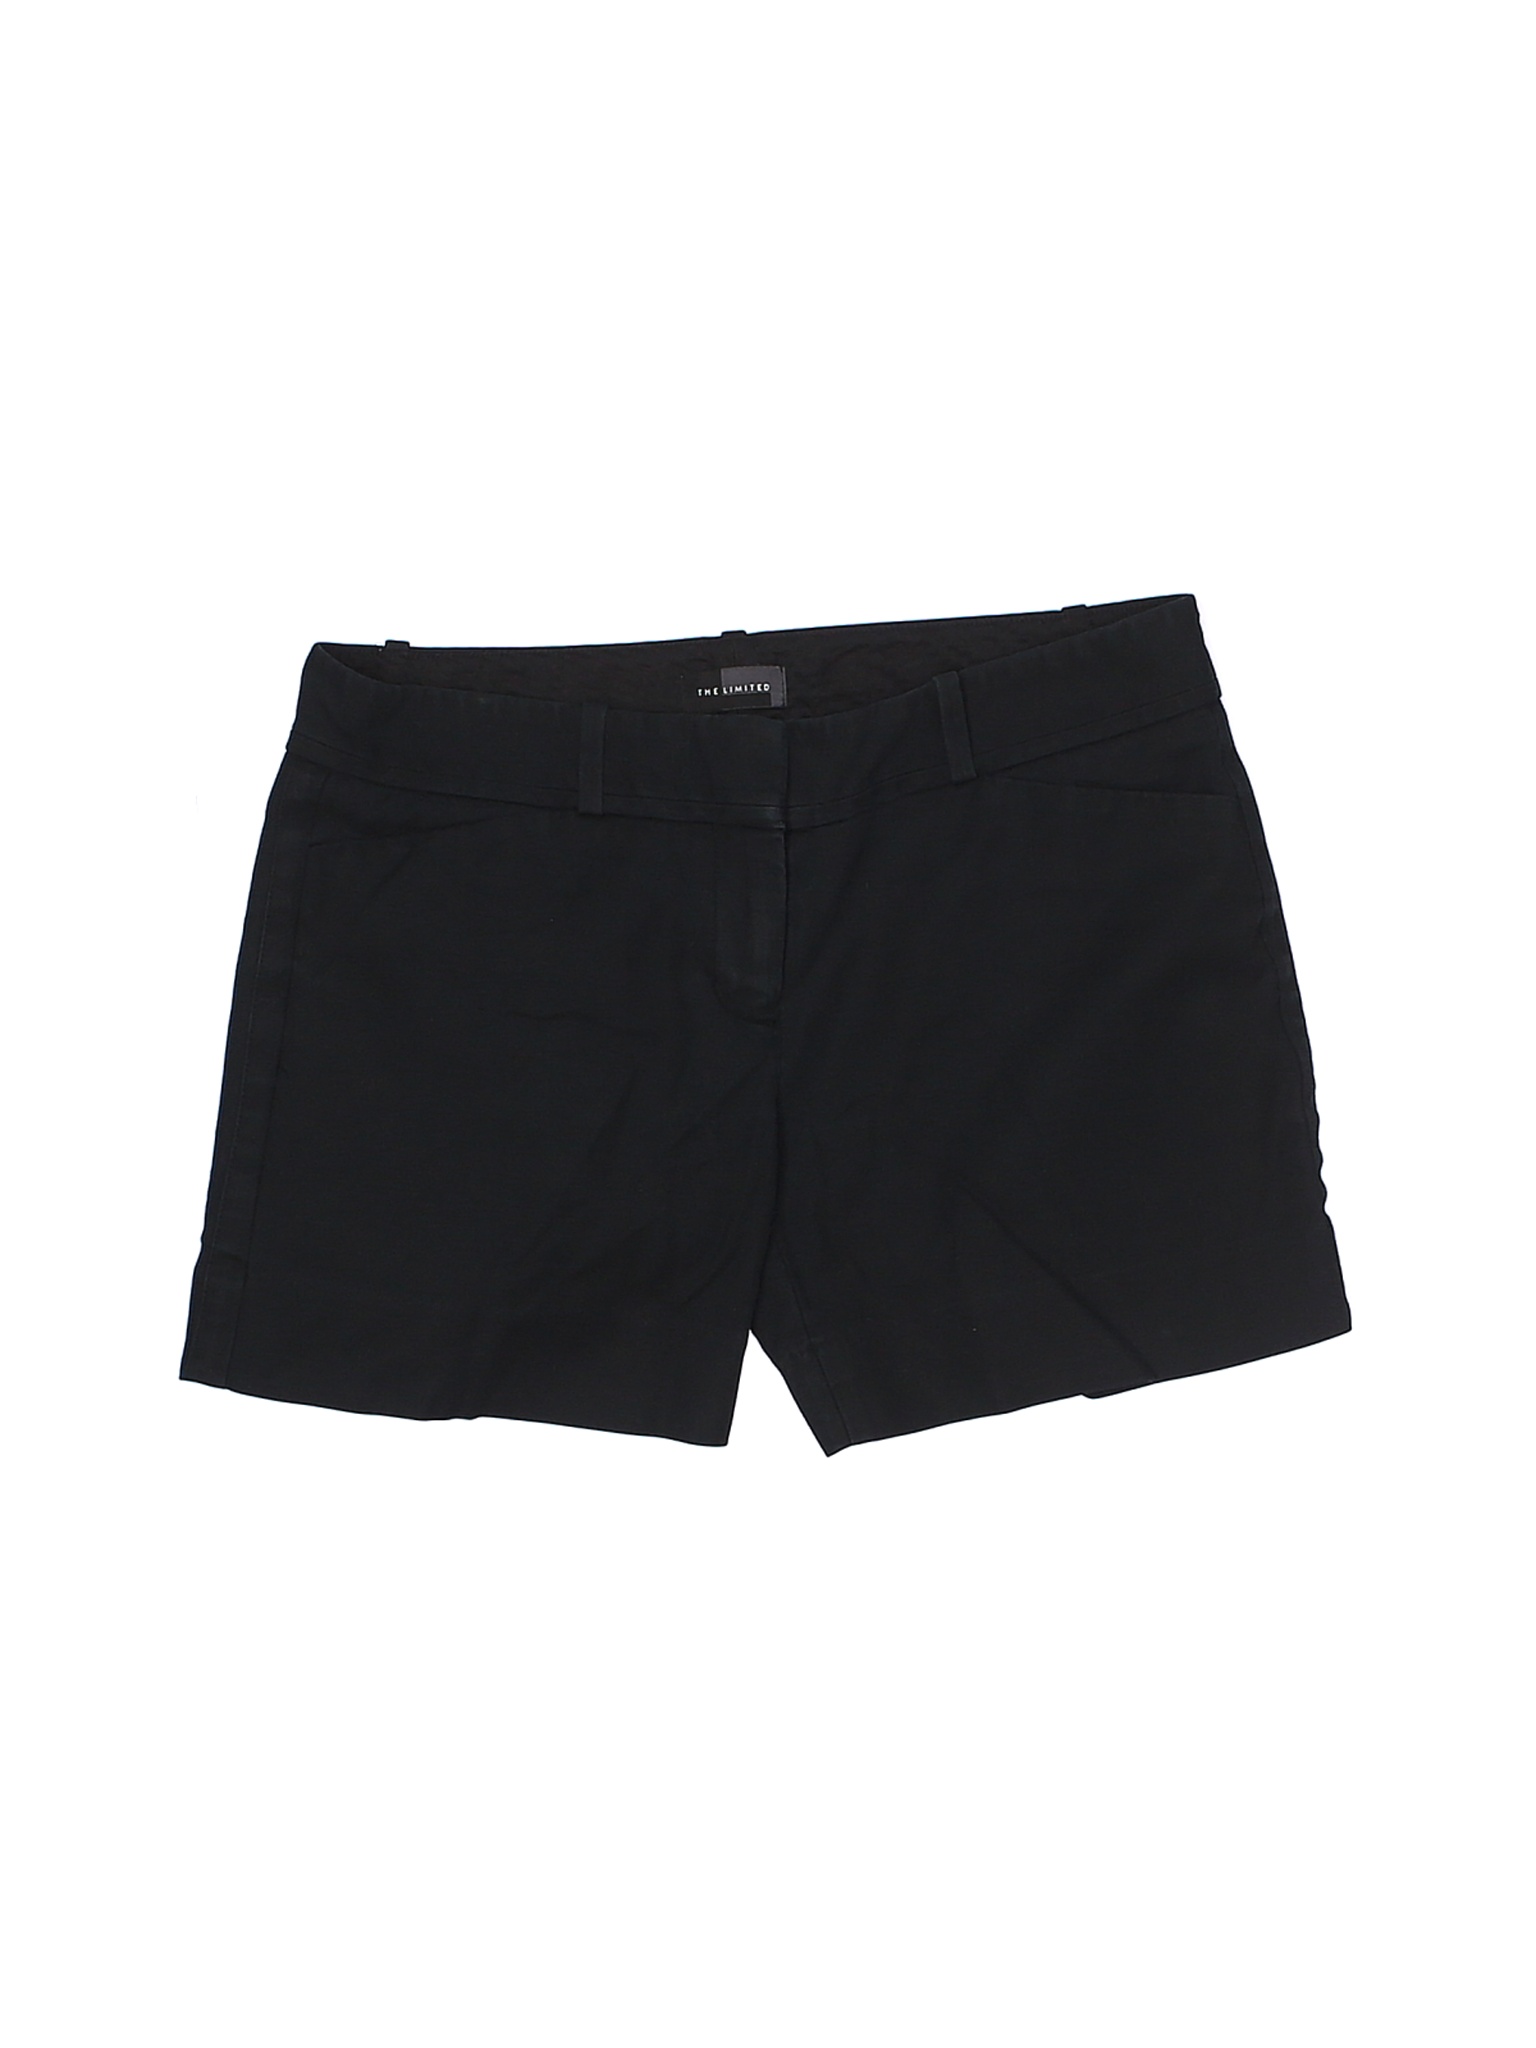 The Limited Women Black Shorts 2 | eBay